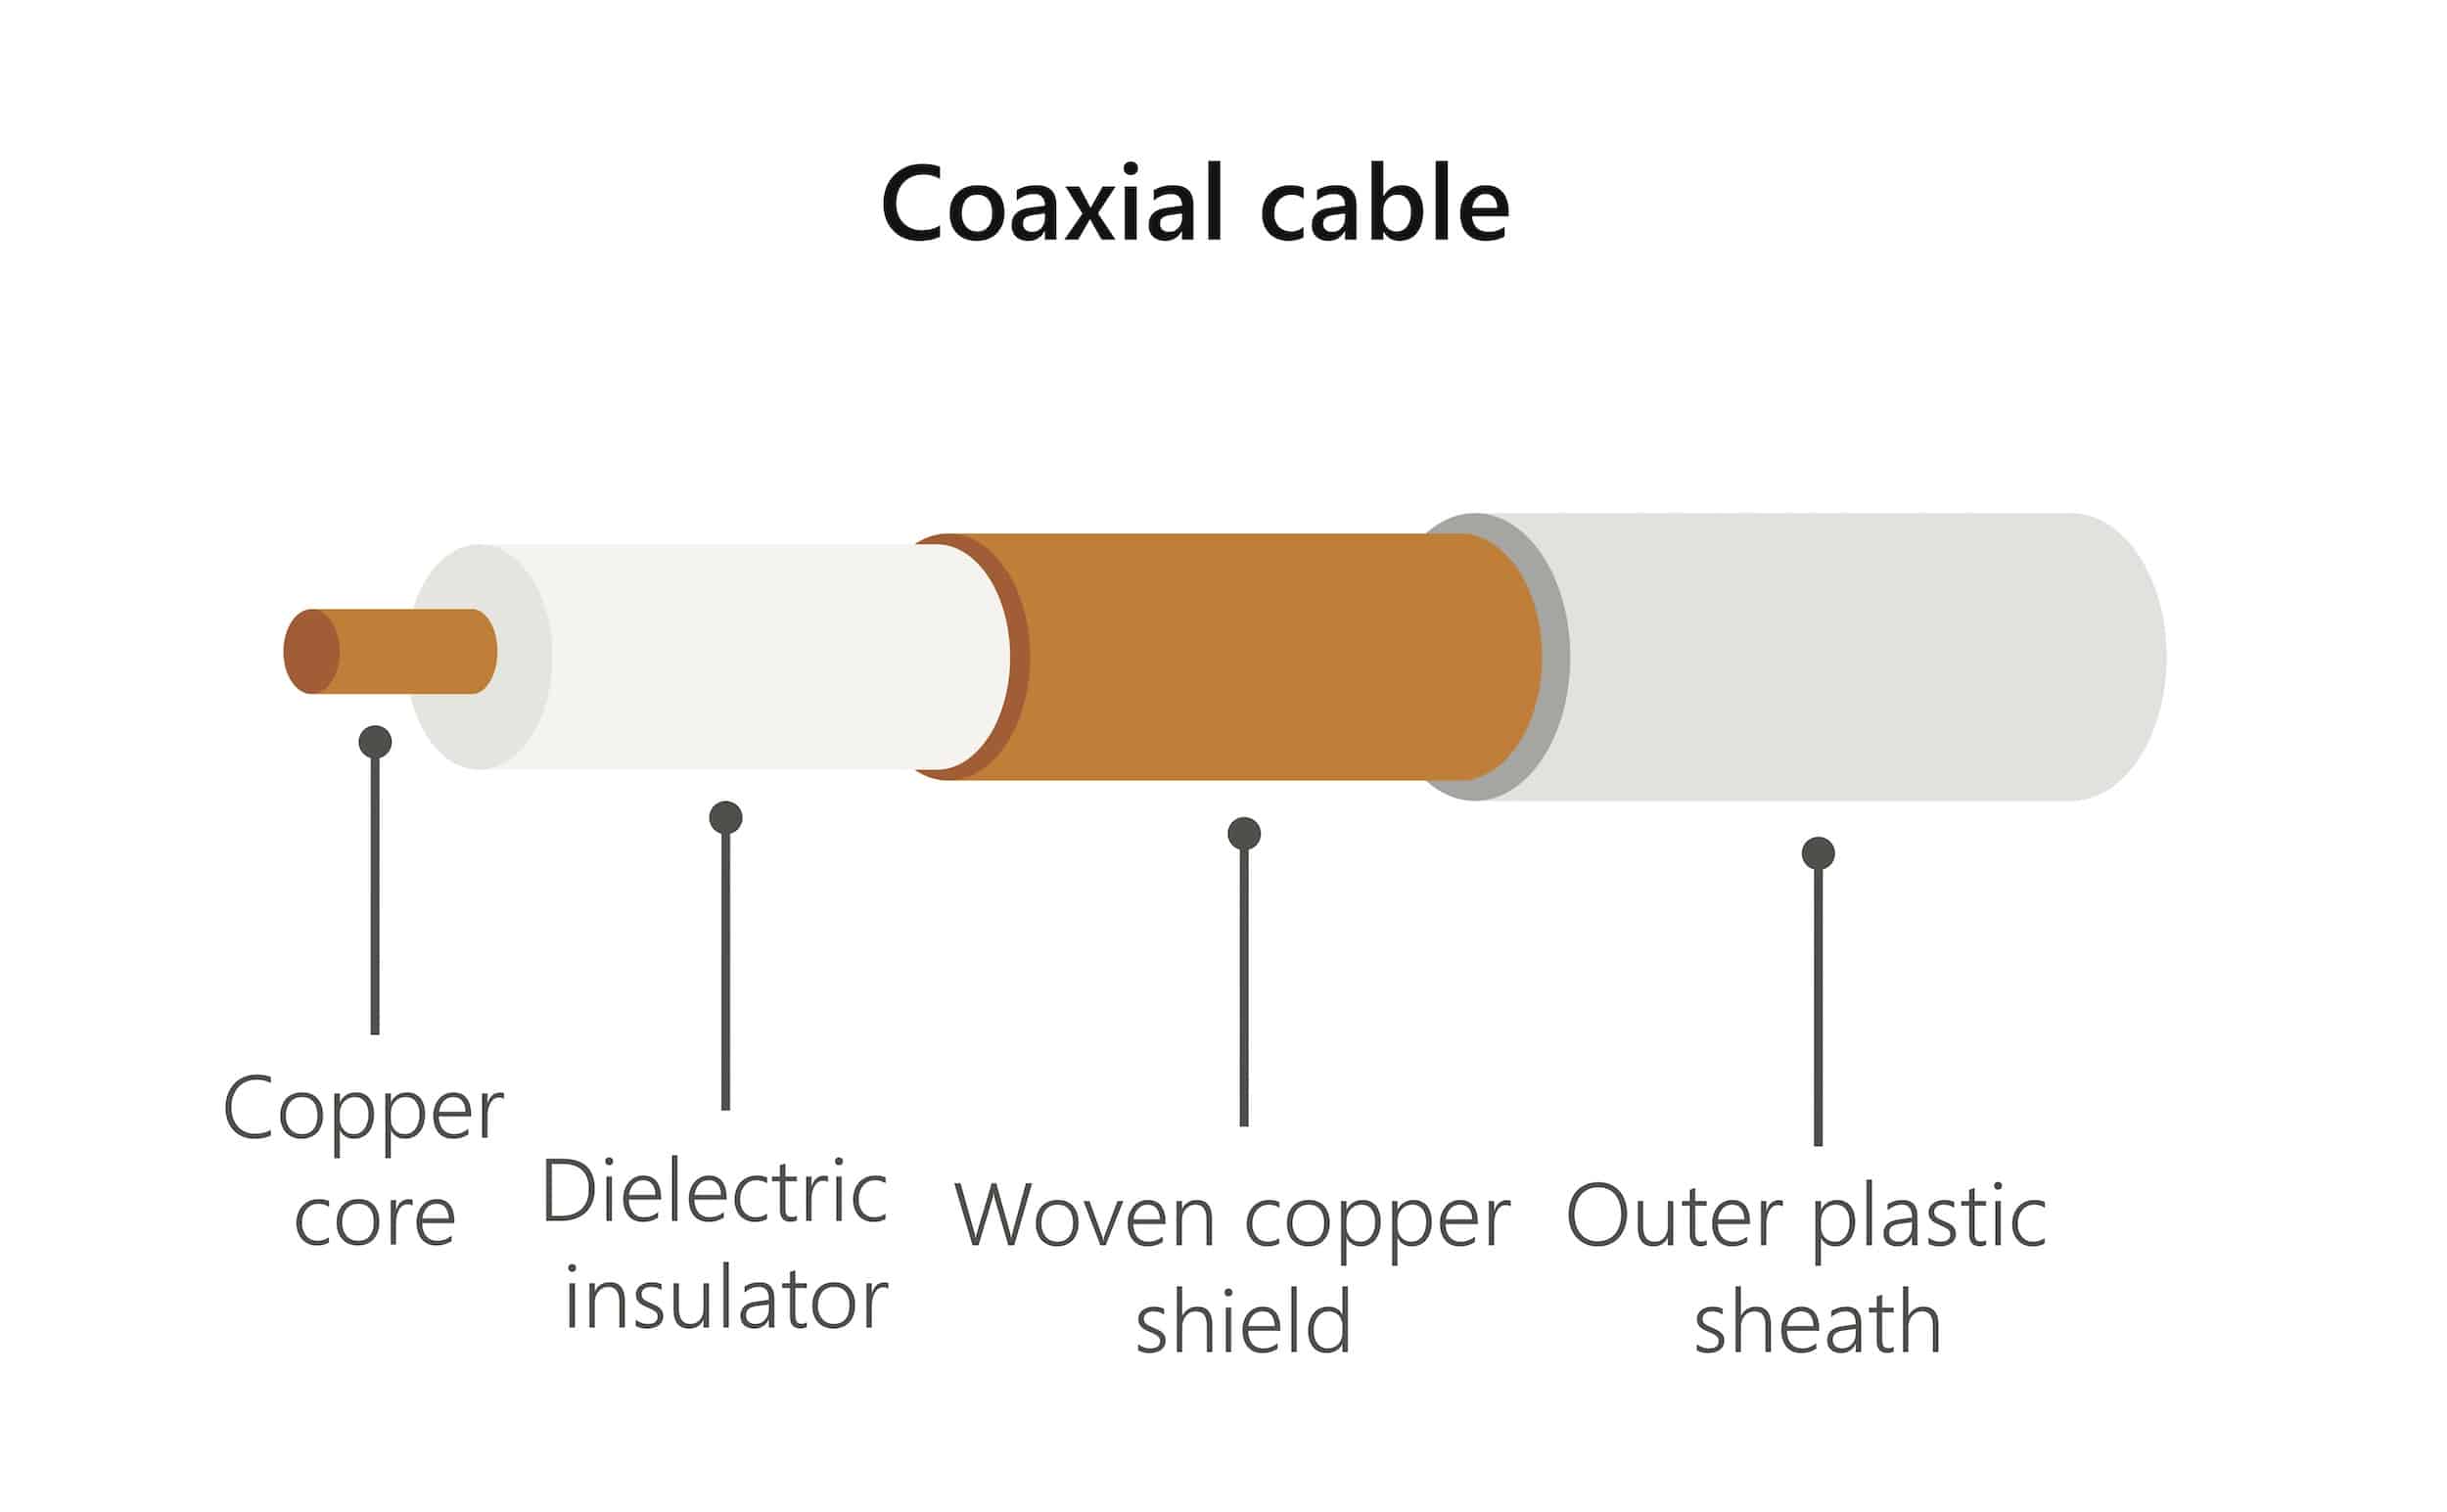 Coaxial cable diagram